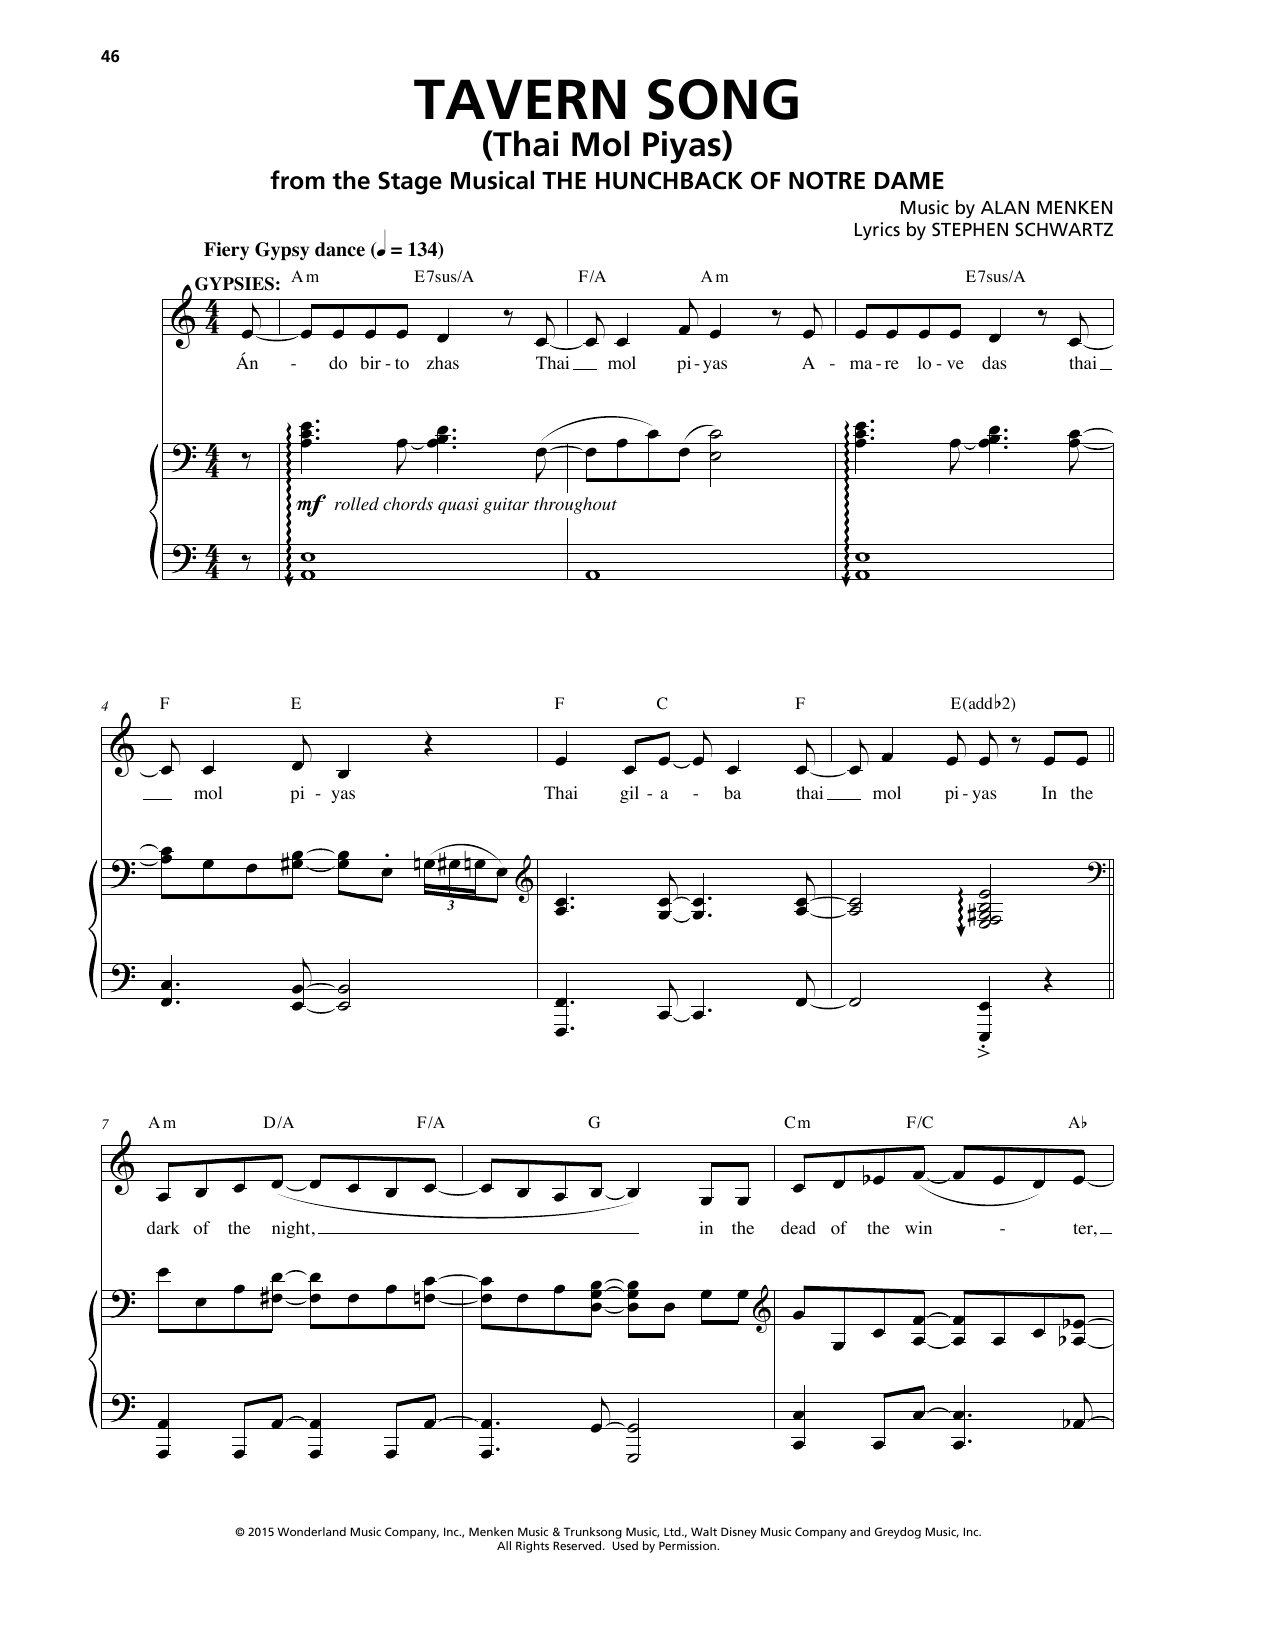 Tavern Song (Thai Mol Piyas) sheet music